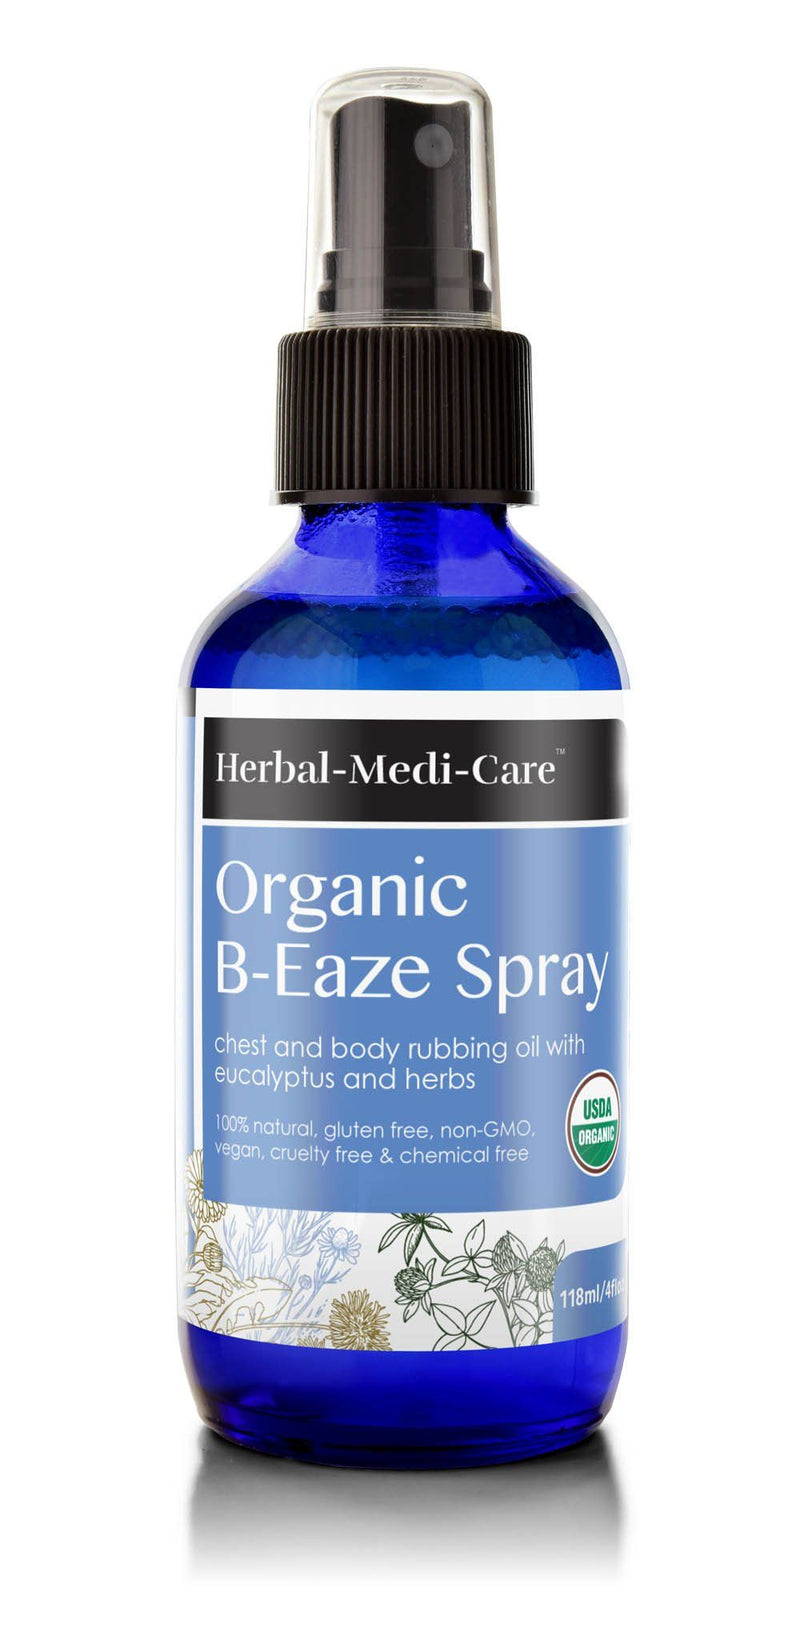 Herbal-Medi-Care Organic B-Eaze (Chest Congestion) Spray; 3.38 floz - Herbal-Medi-Care Organic B-Eaze (Chest Congestion) Spray; 3.38 floz - Herbal-Medi-Care Organic B-Eaze (Chest Congestion) Spray; 3.38 floz